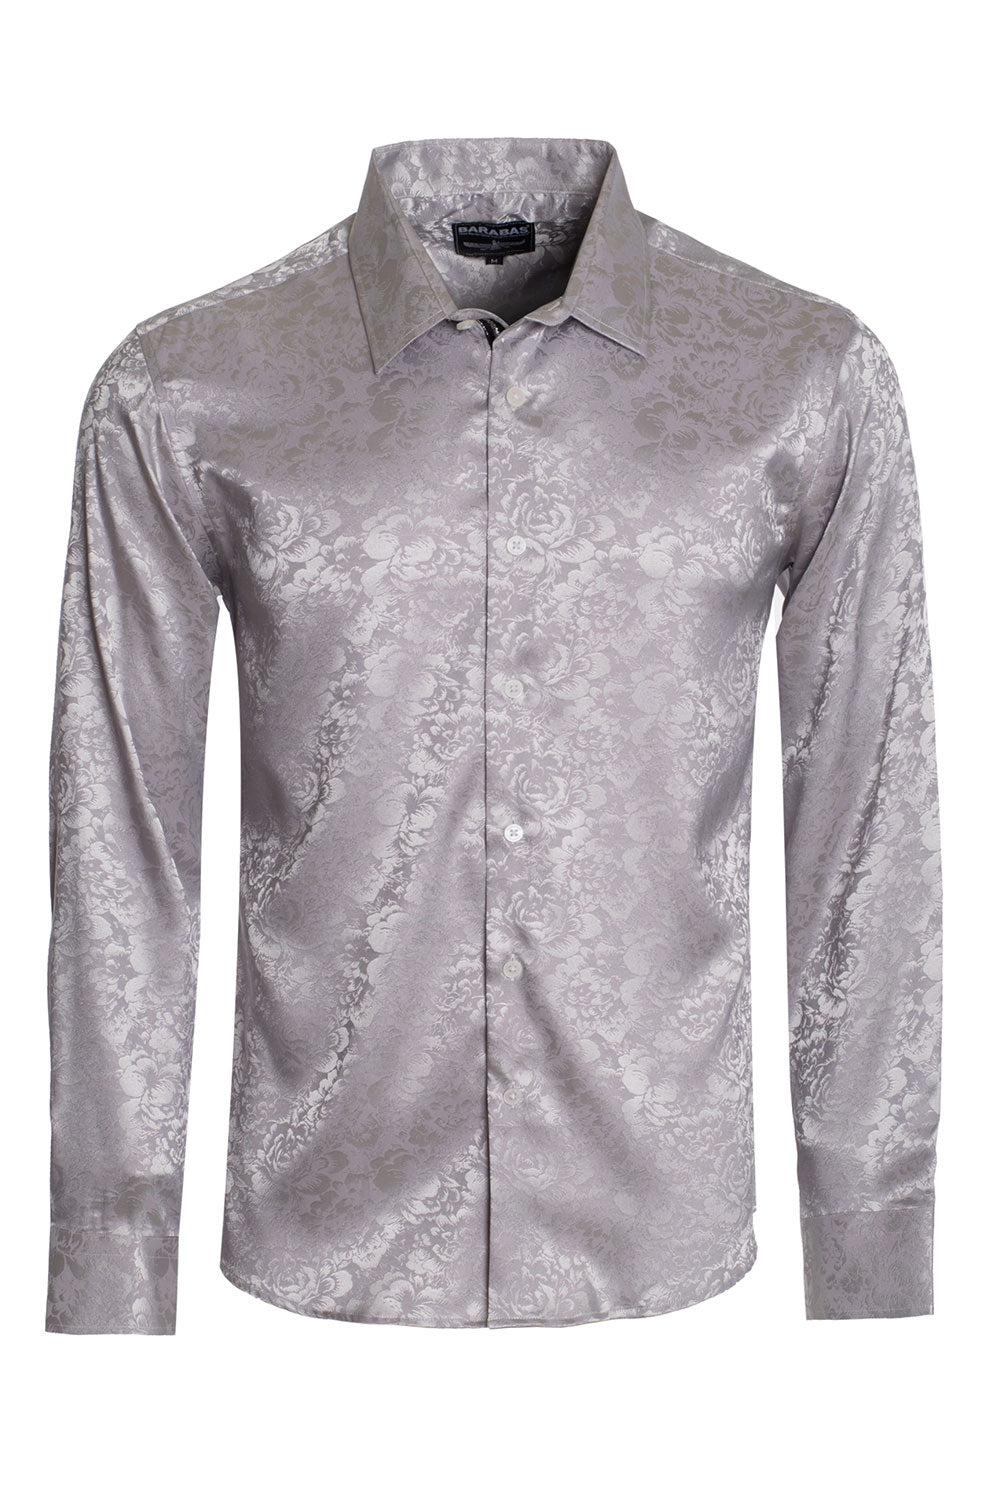 BARABAS Wholesale Men's textured floral button down dress shirts B309 Silver